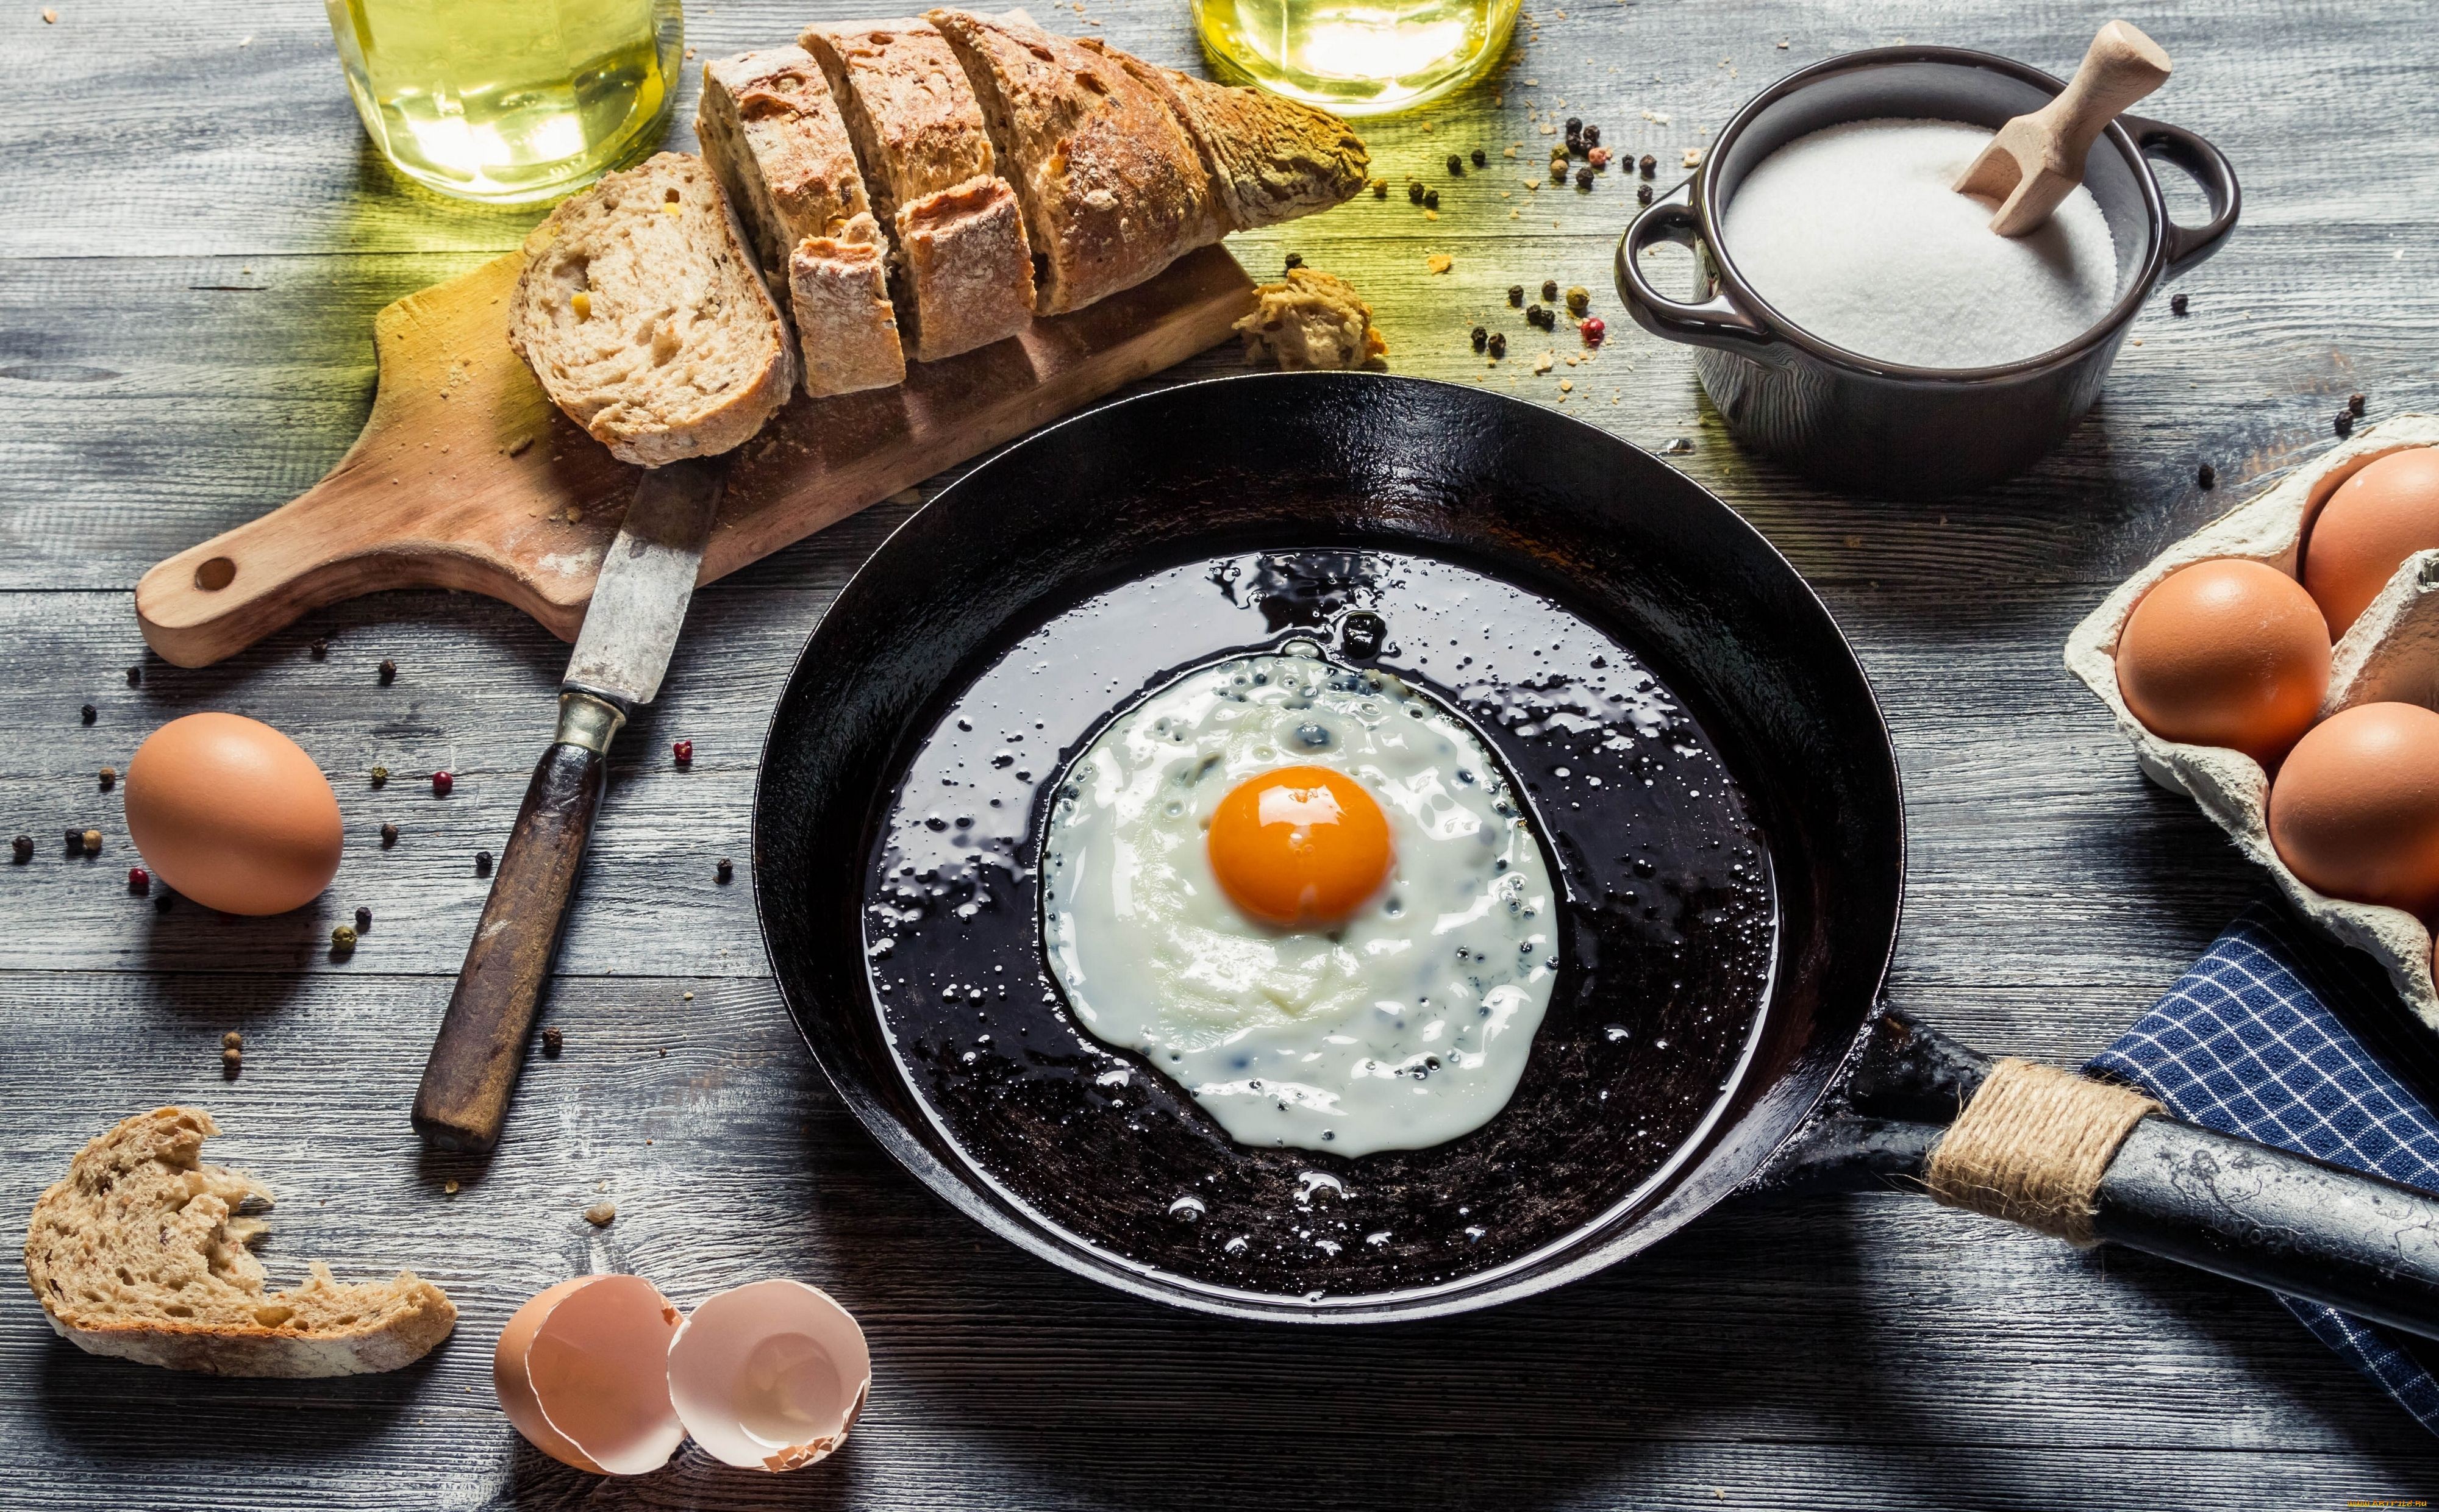 Food Egg HD Wallpaper | Background Image